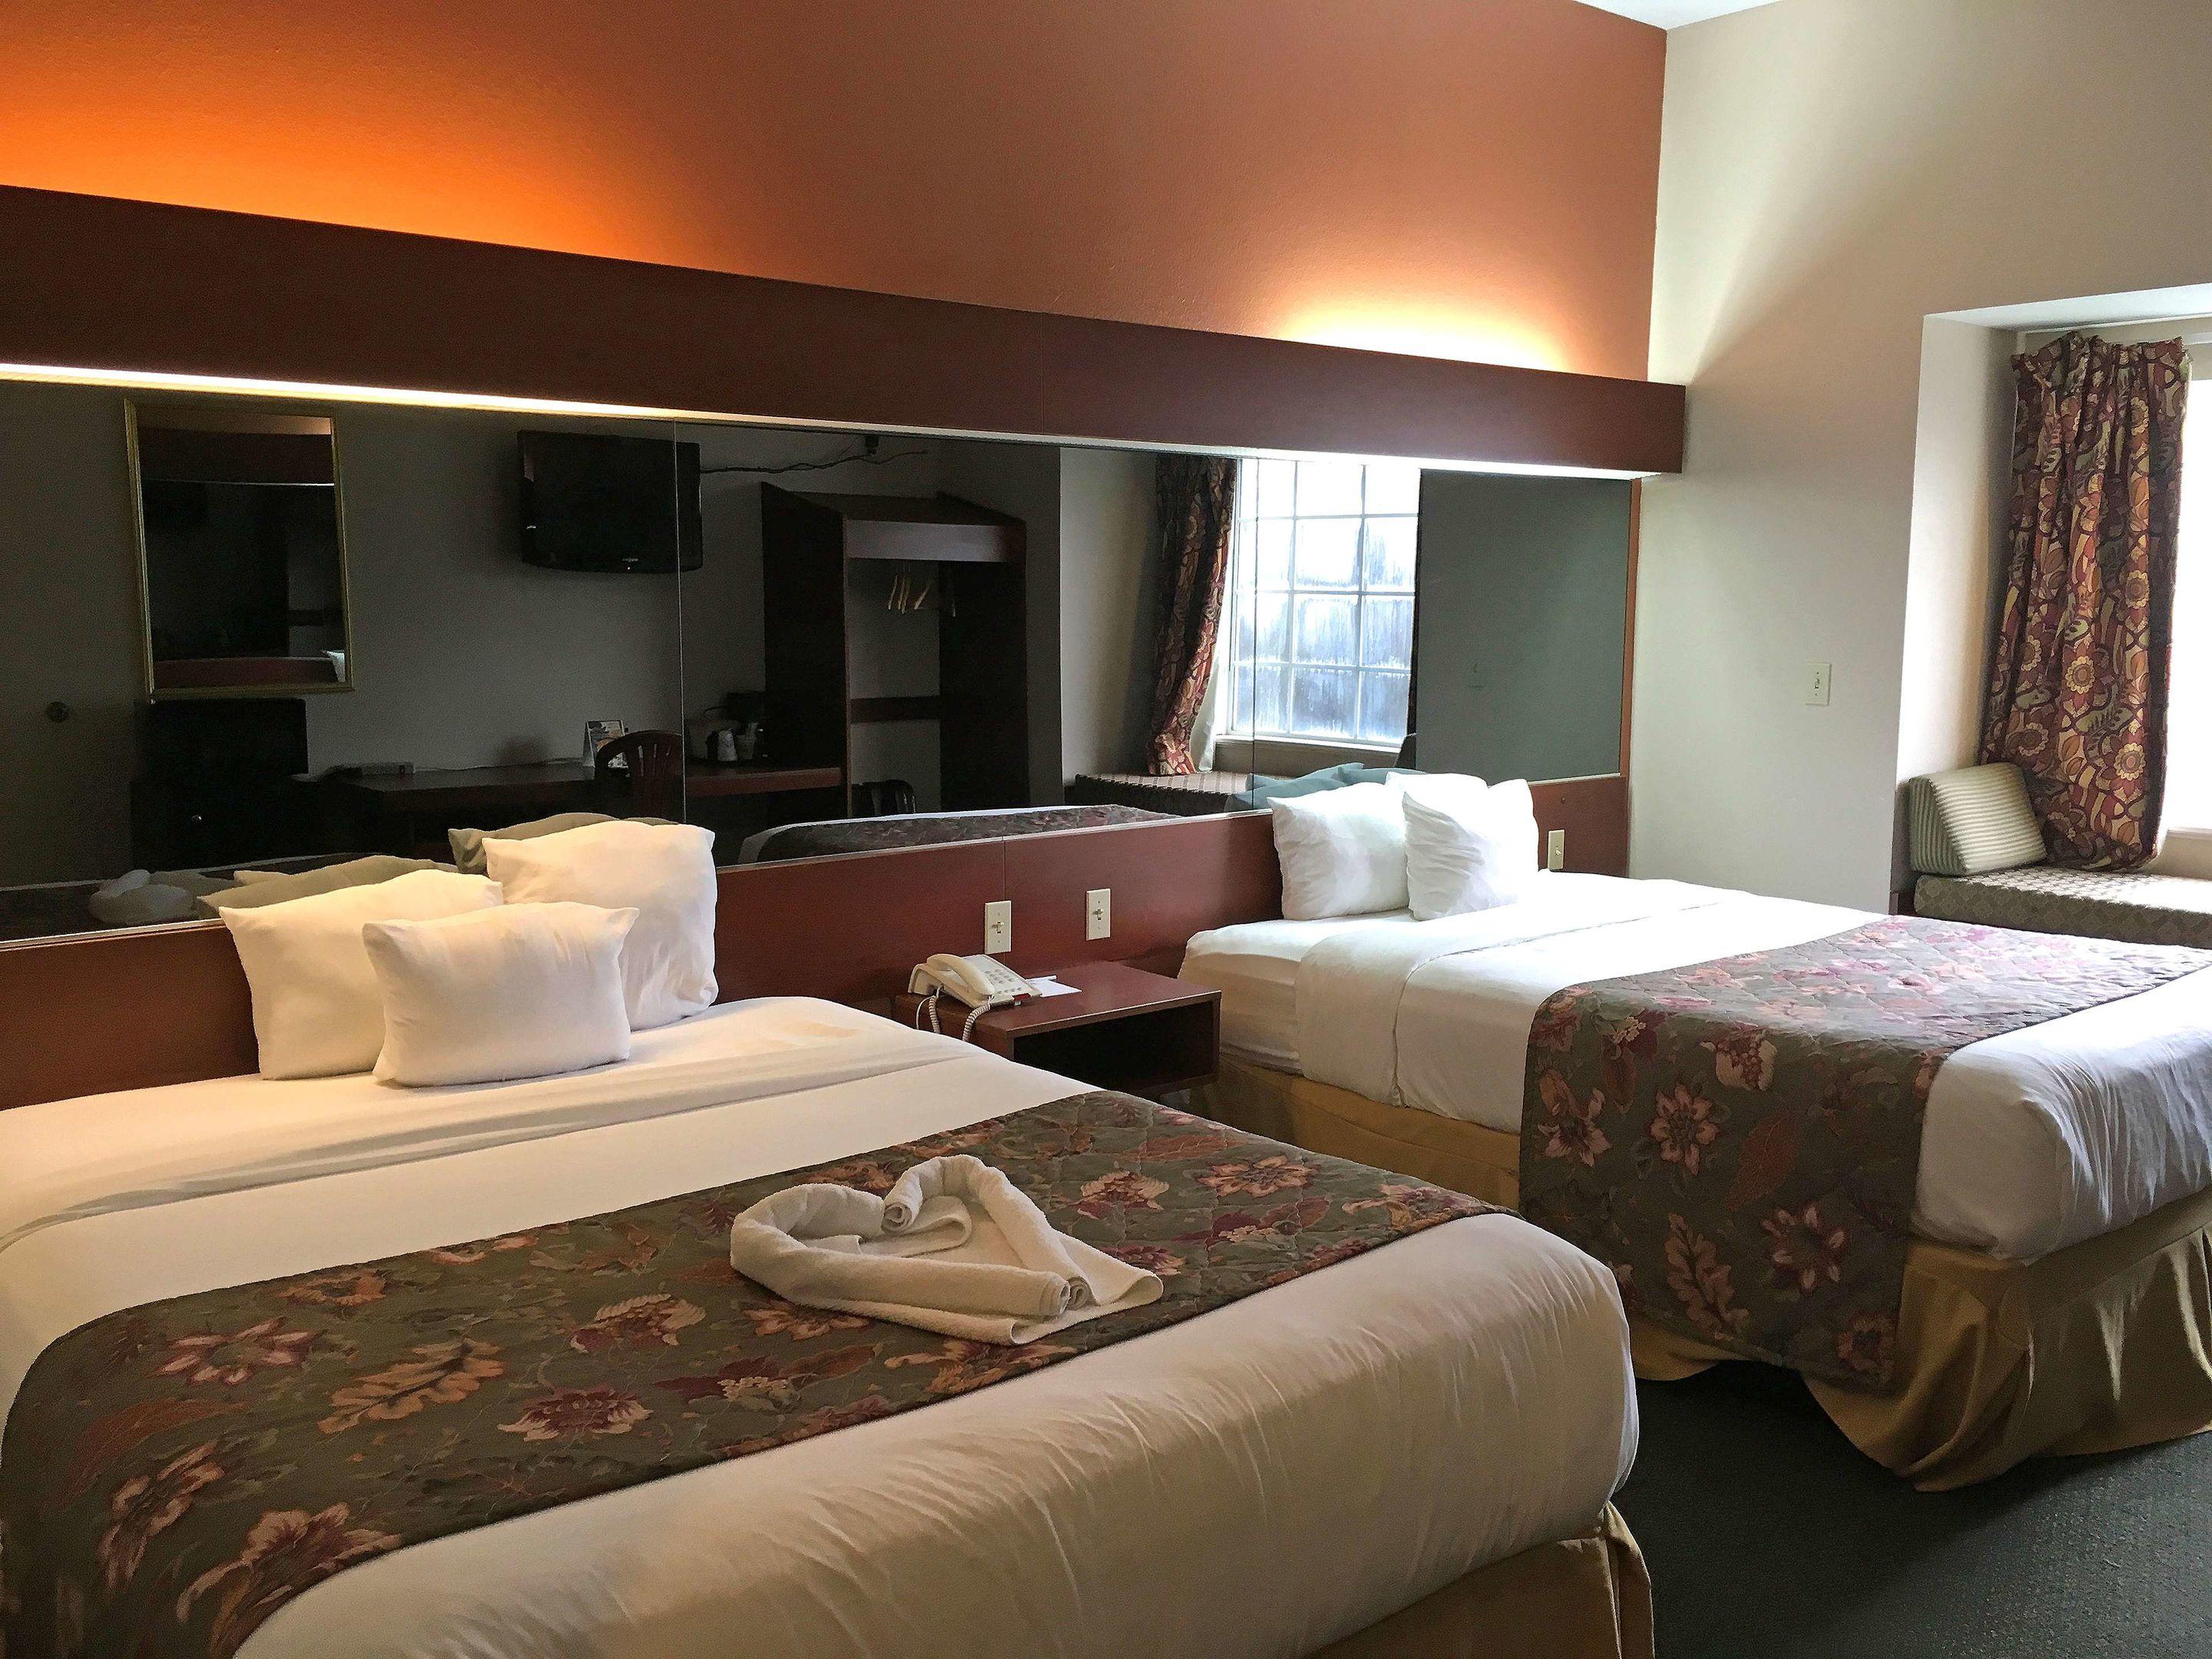 Americas Best Value Inn & Suites - Lake Charles / I-210 Exit 5